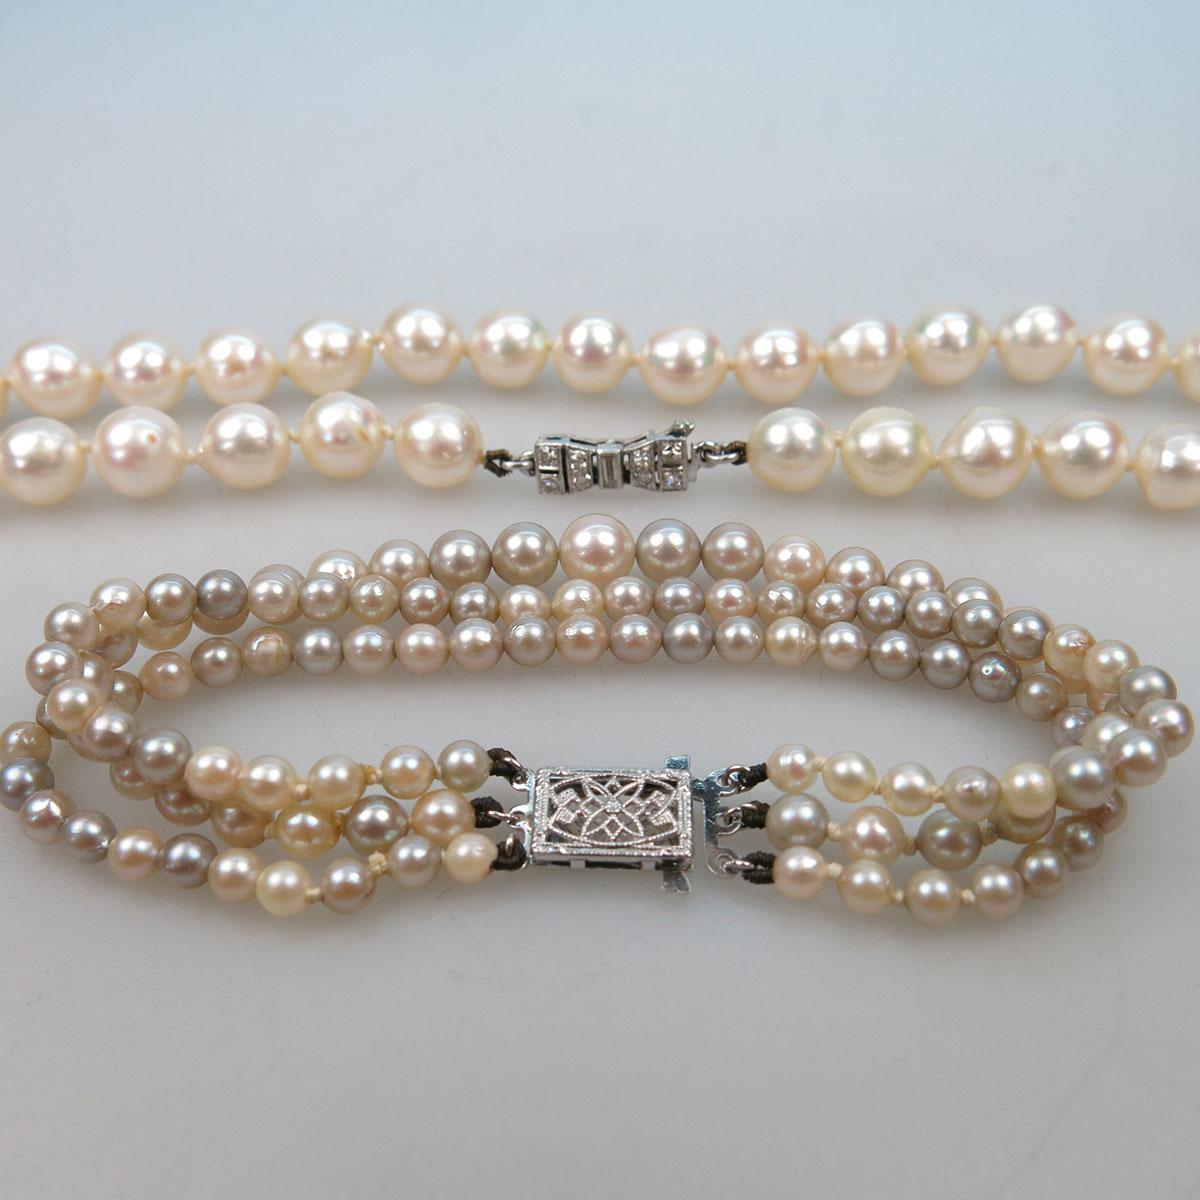 Single Strand Cultured Baroque Pearl Necklace